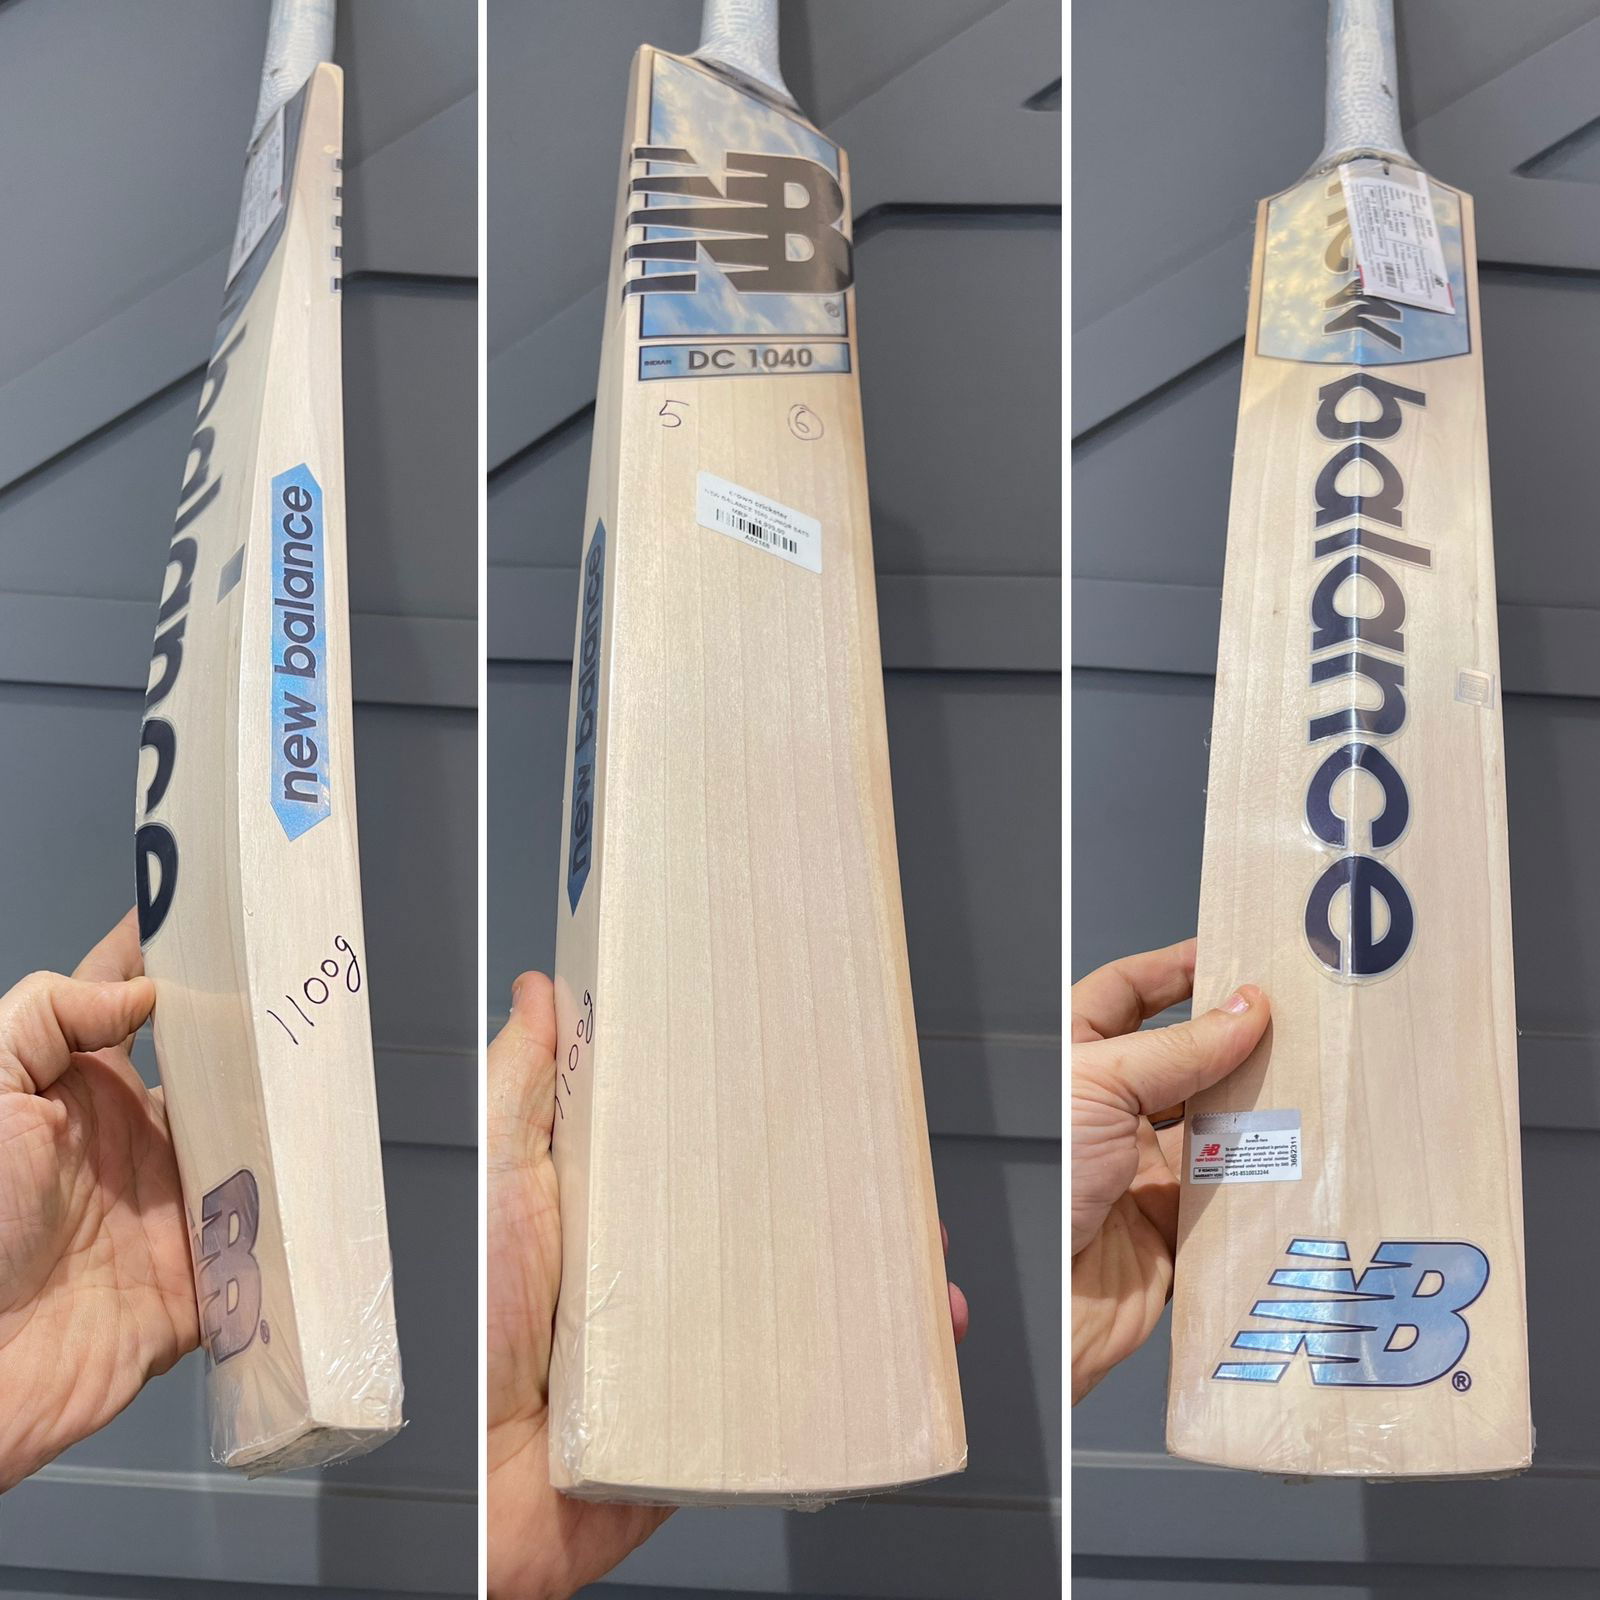 New Balance DC 1040 Cricket Bat size 6